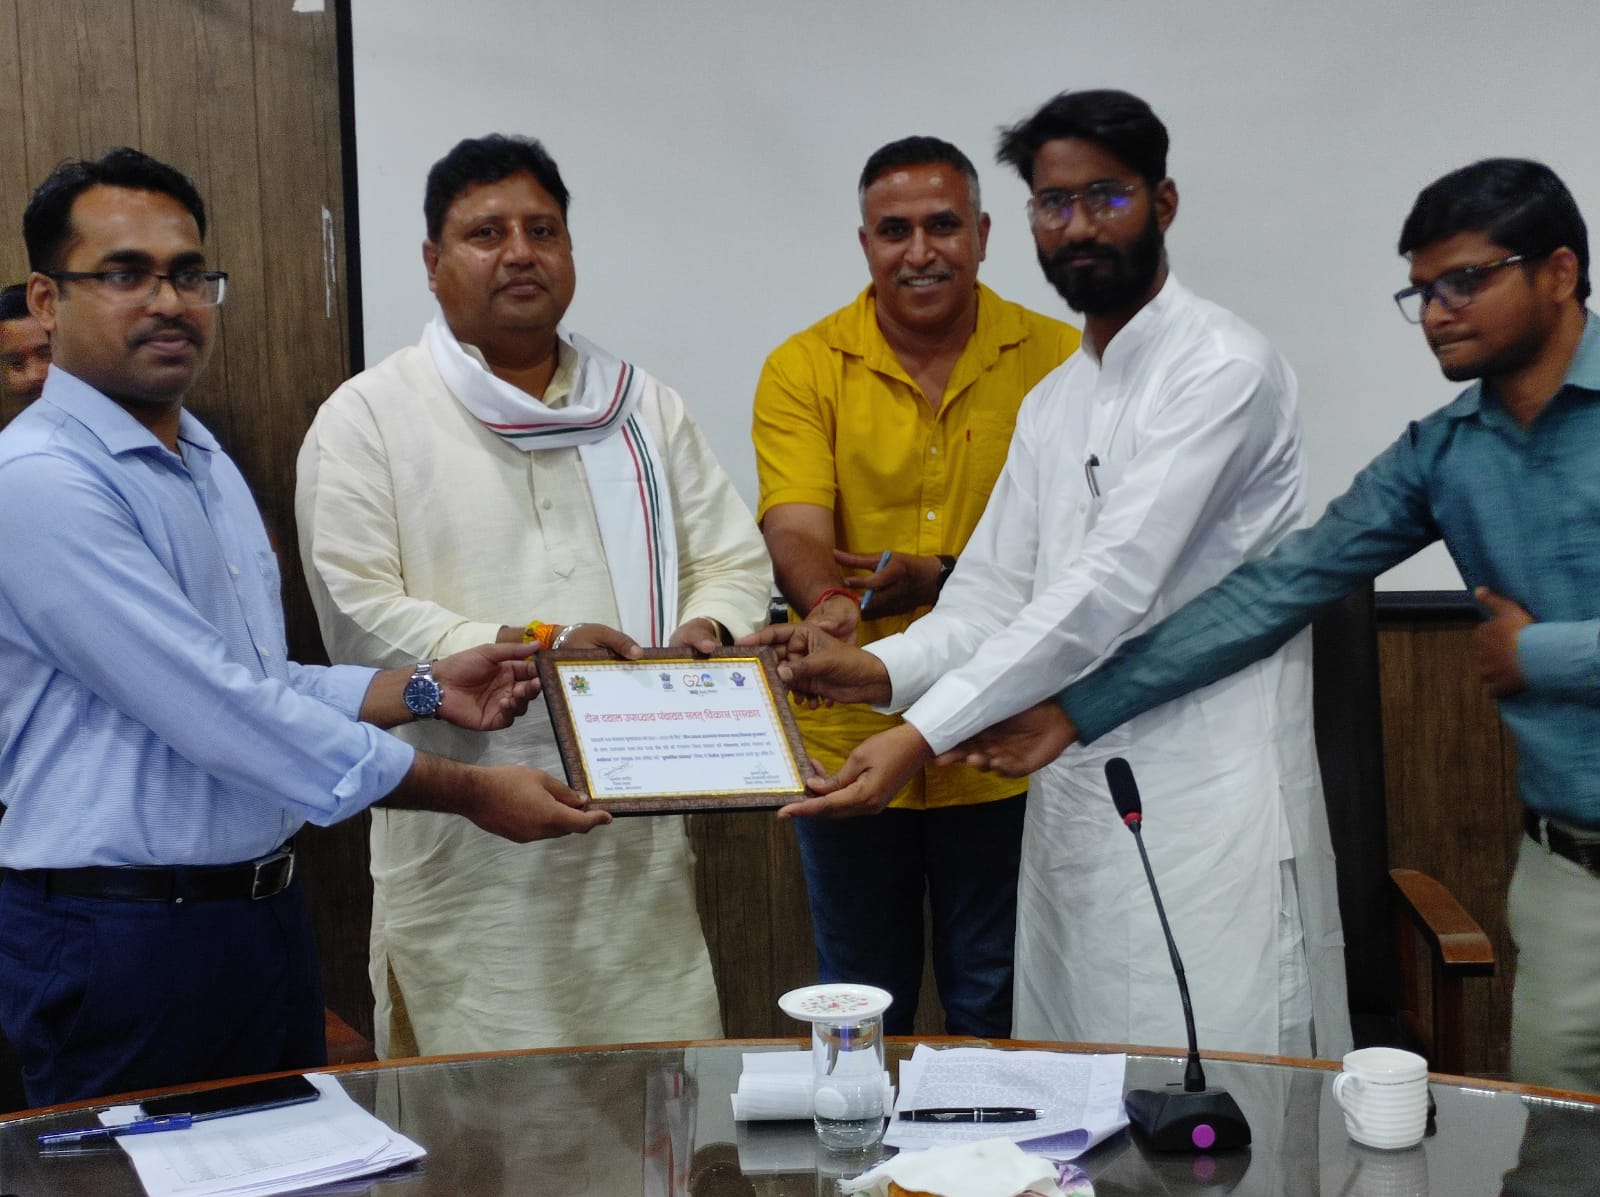 Resurgence National Panchayat Award organized